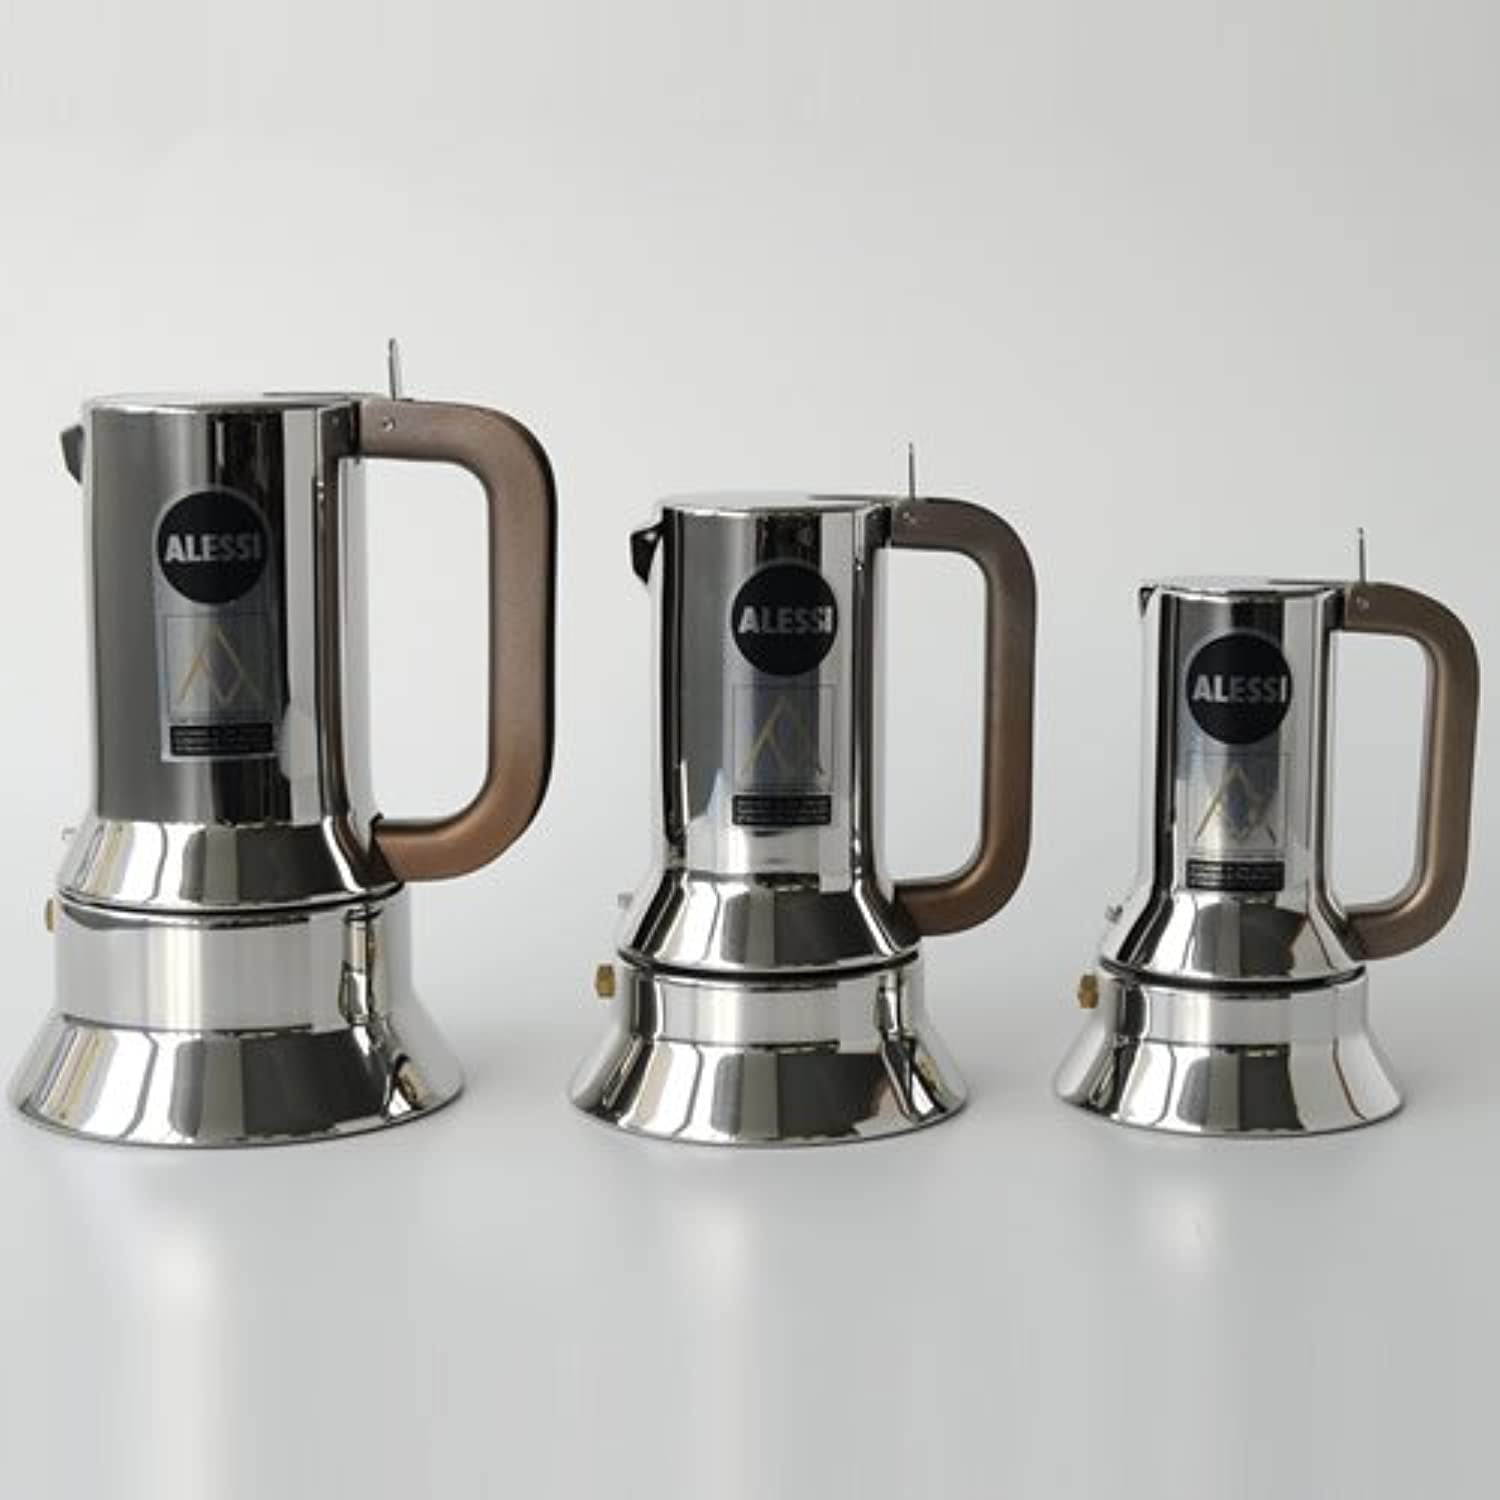 Alessi Espresso Coffee Maker for 6 Cups at FORZIERI